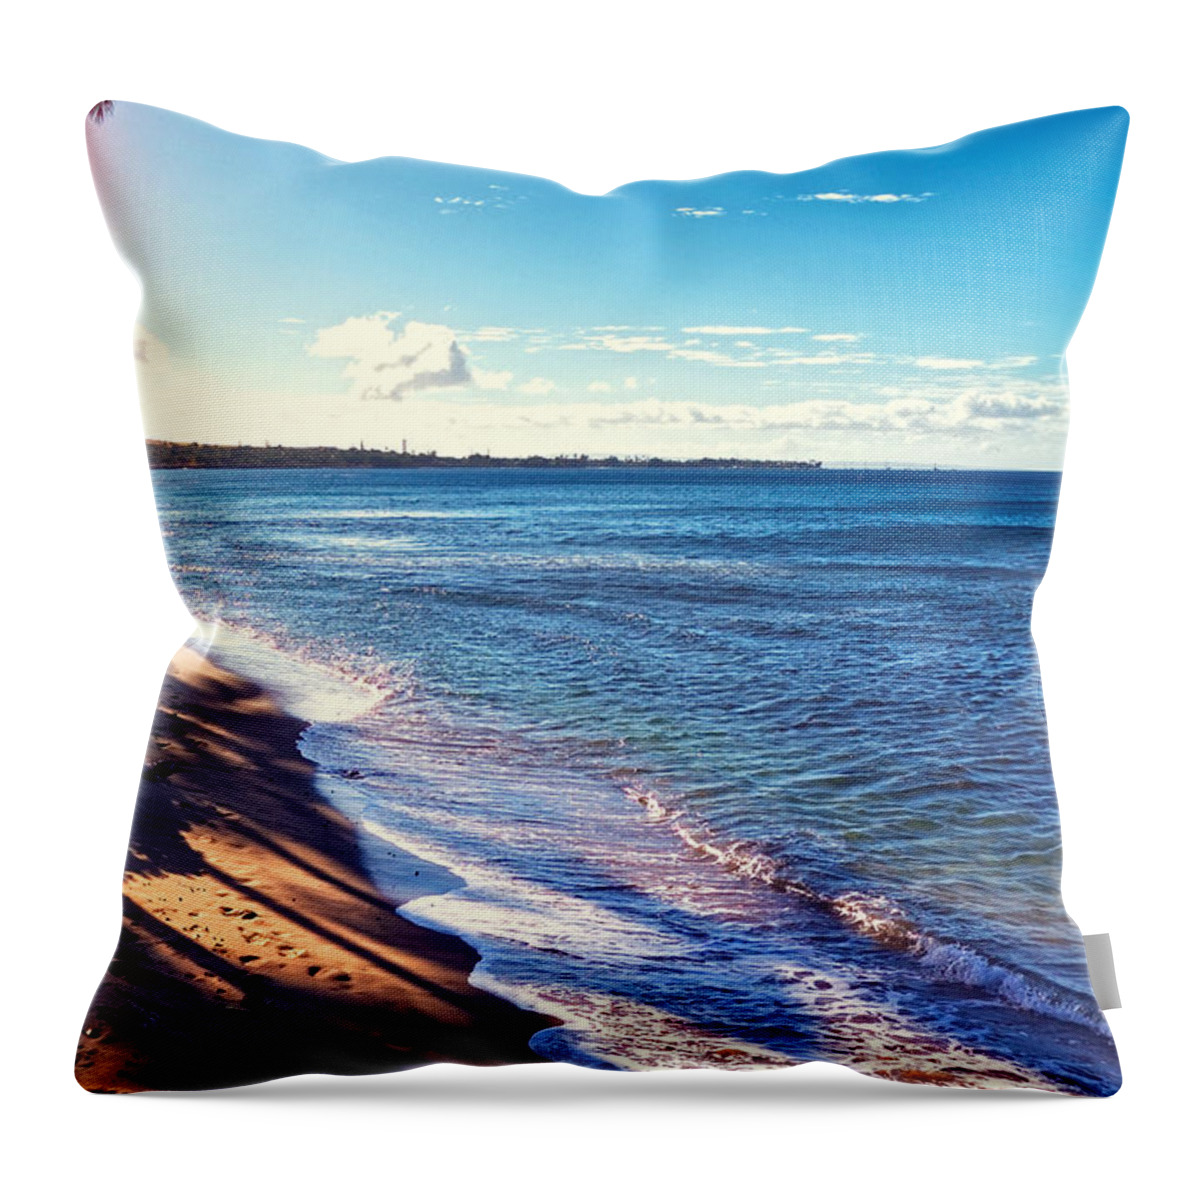 Hawaii Throw Pillow featuring the photograph Kaanapali Beach by Lars Lentz